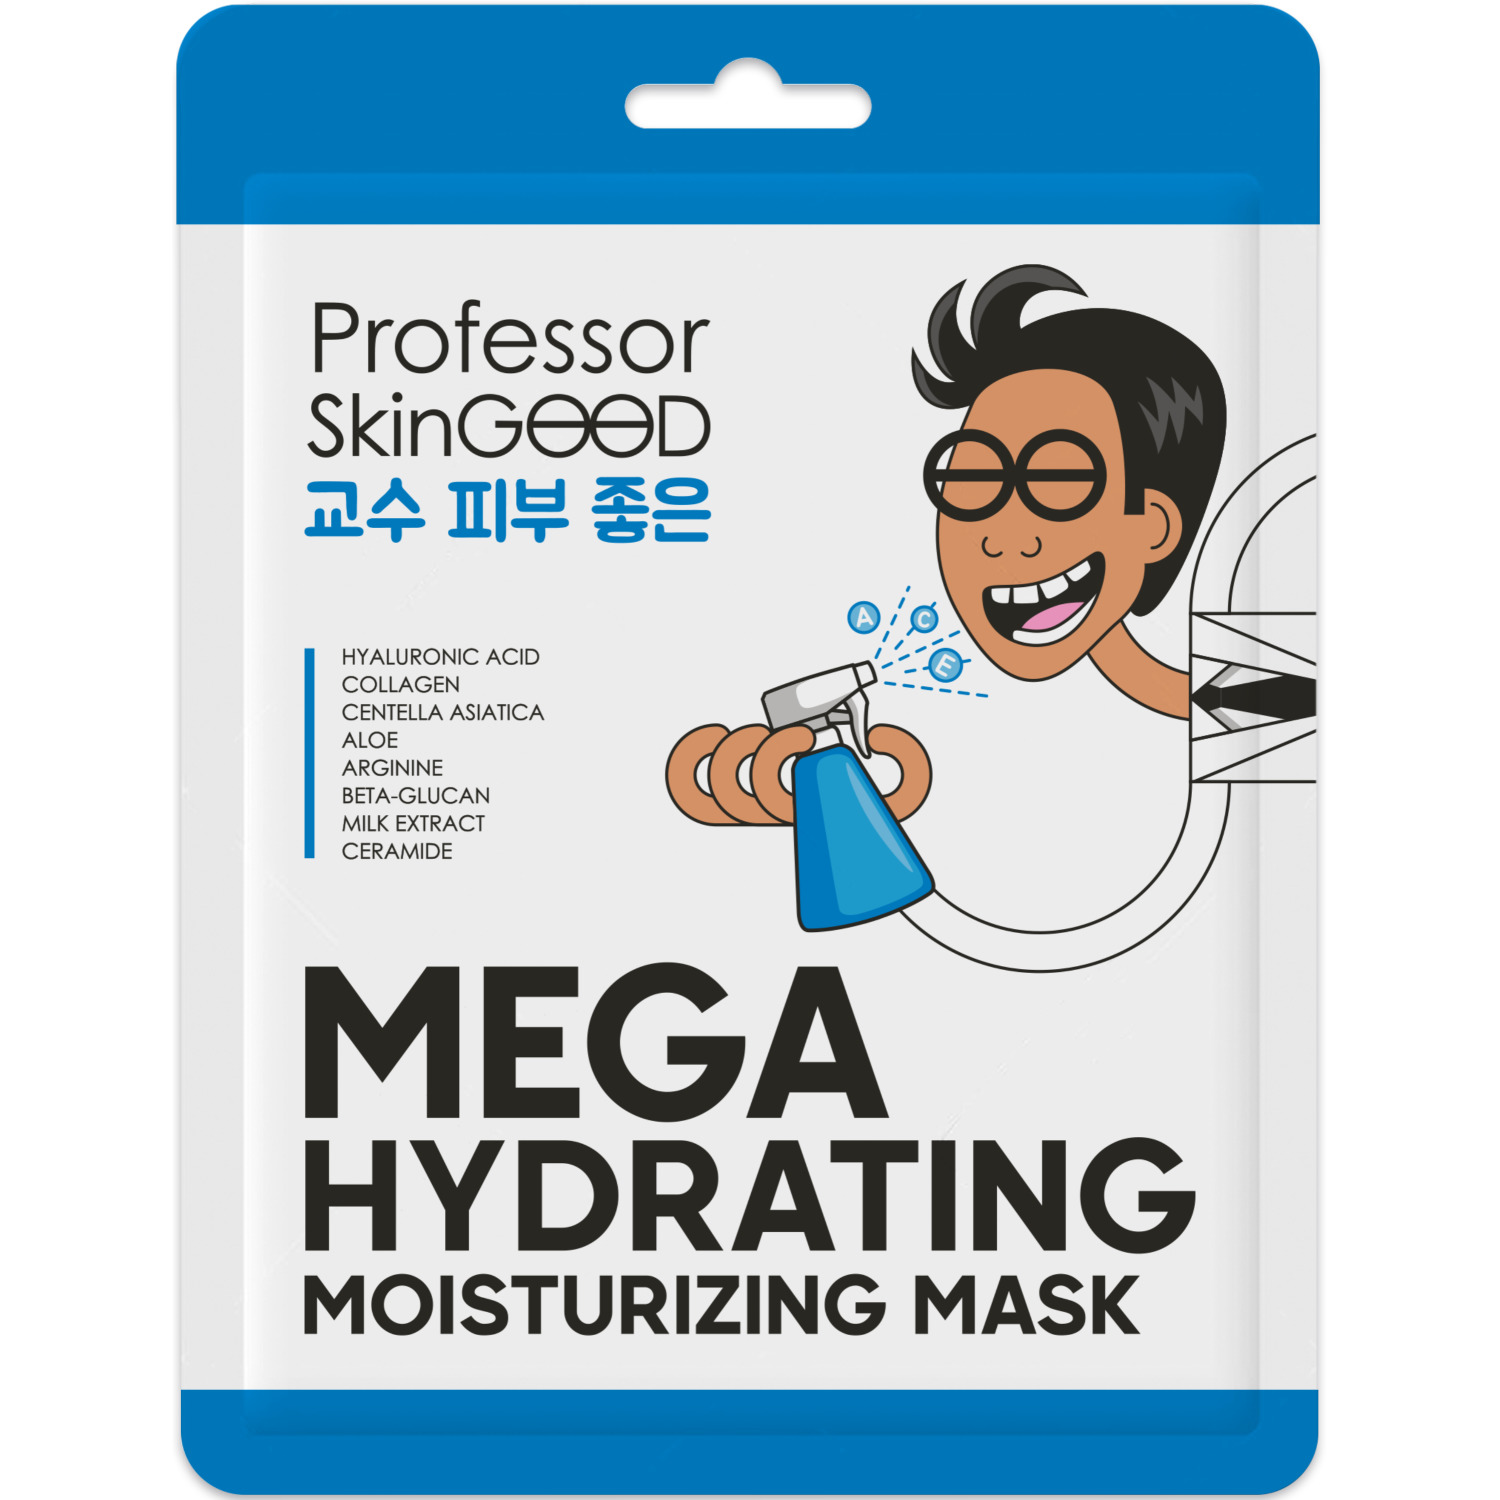 фото Маска для лица professor skingood hydrating moisturizing увлажняющая 1 шт